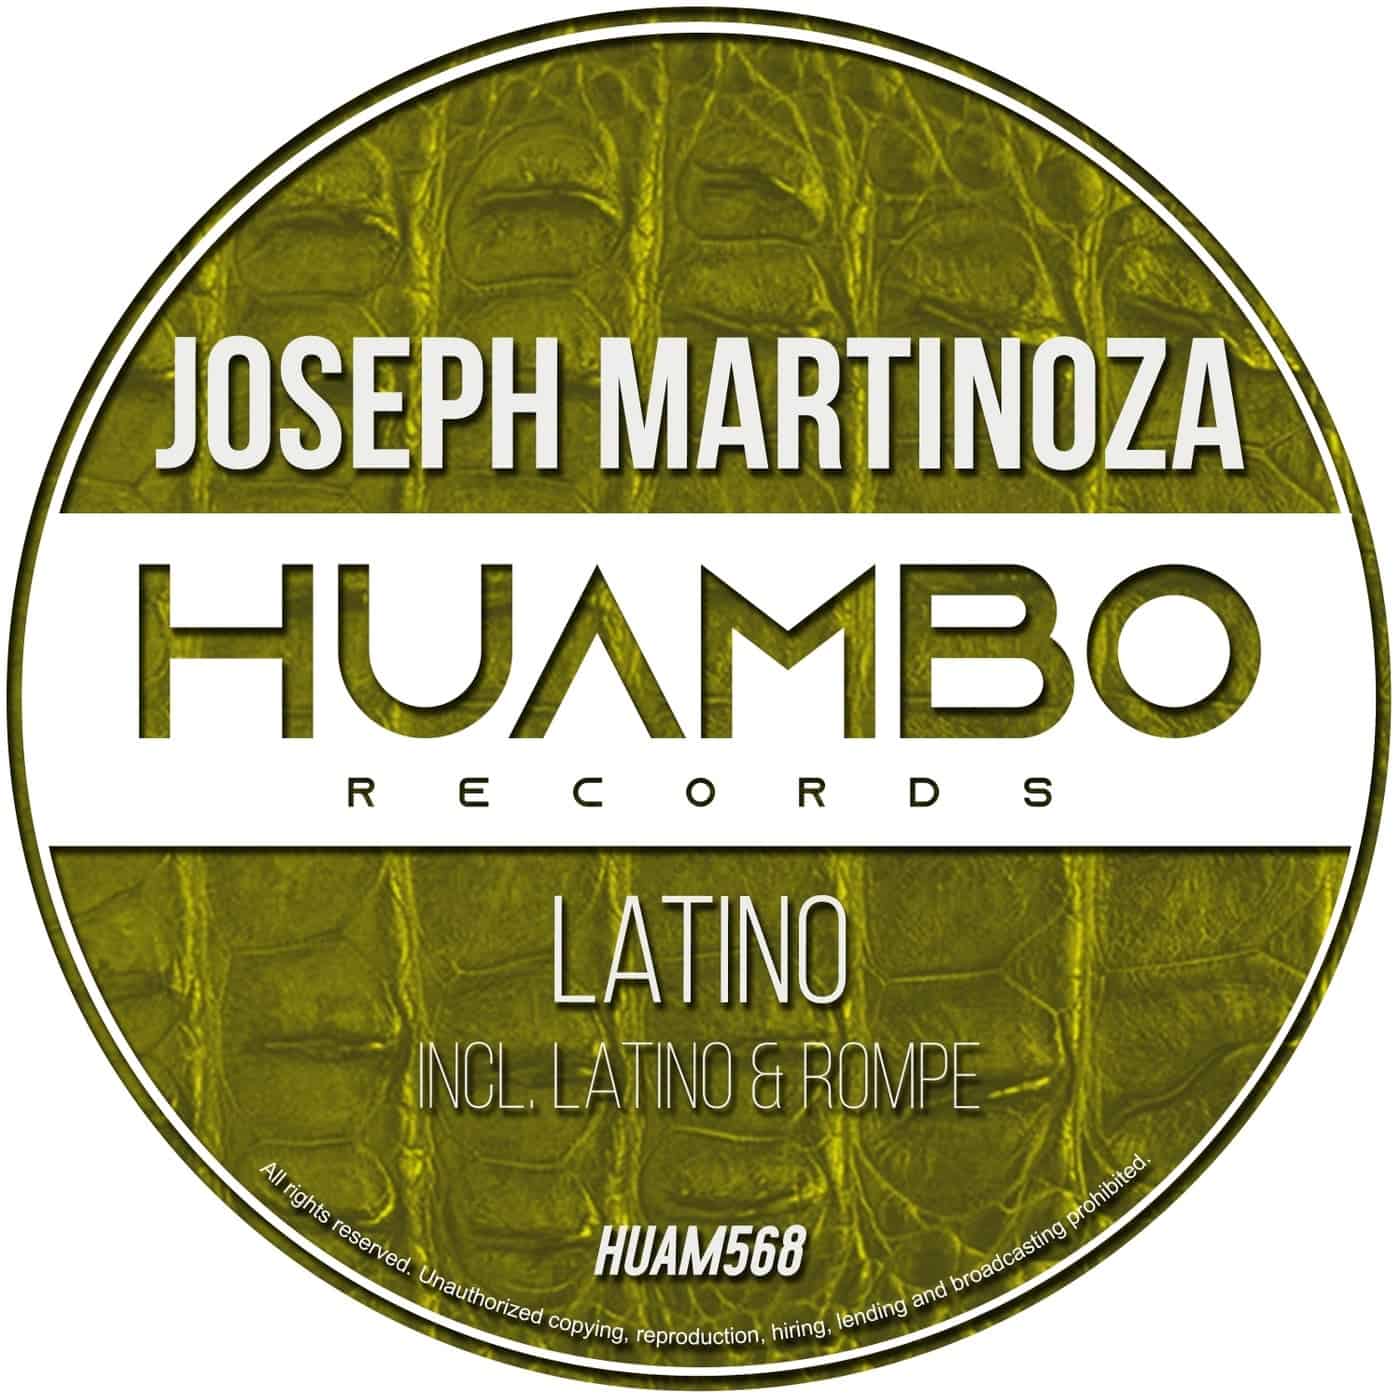 image cover: Joseph Martinoza - Latino / HUAM568